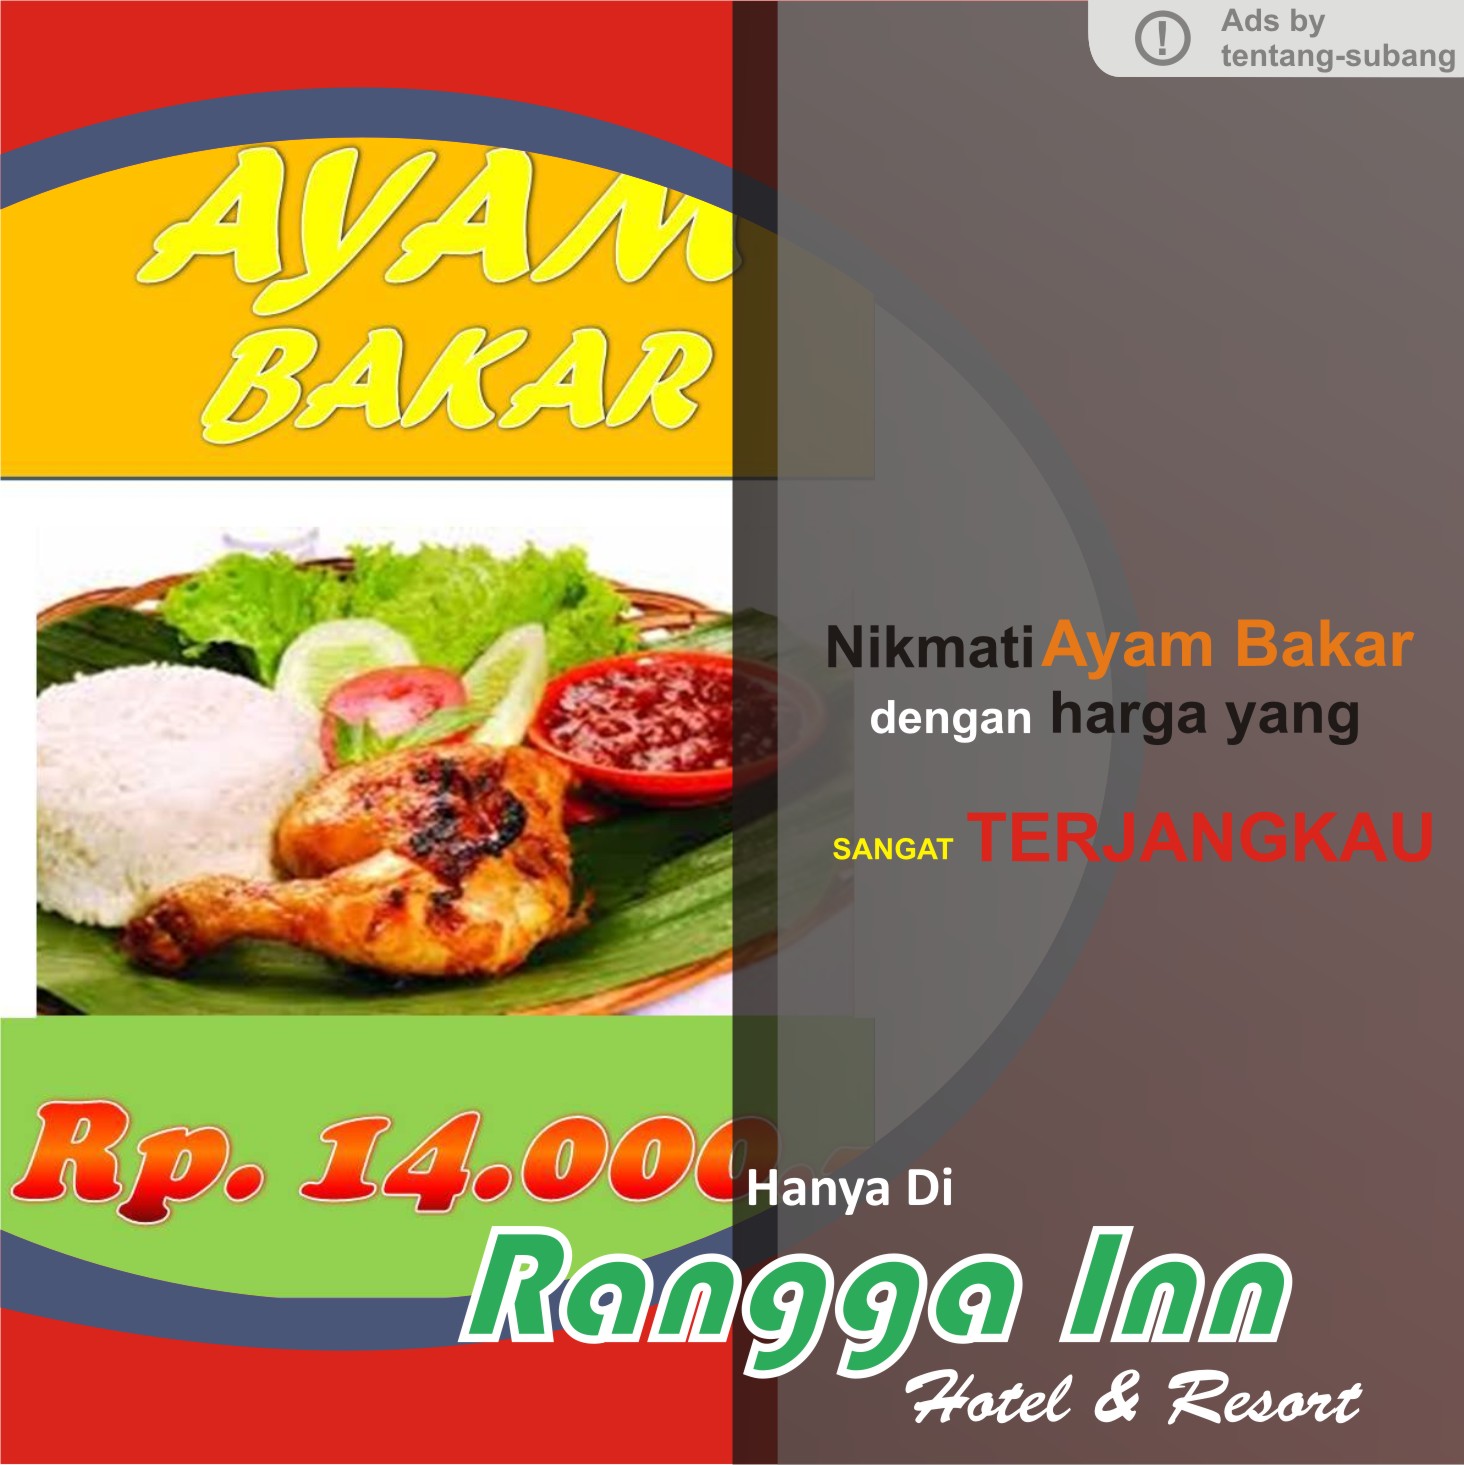 Rangga Inn Restaurant